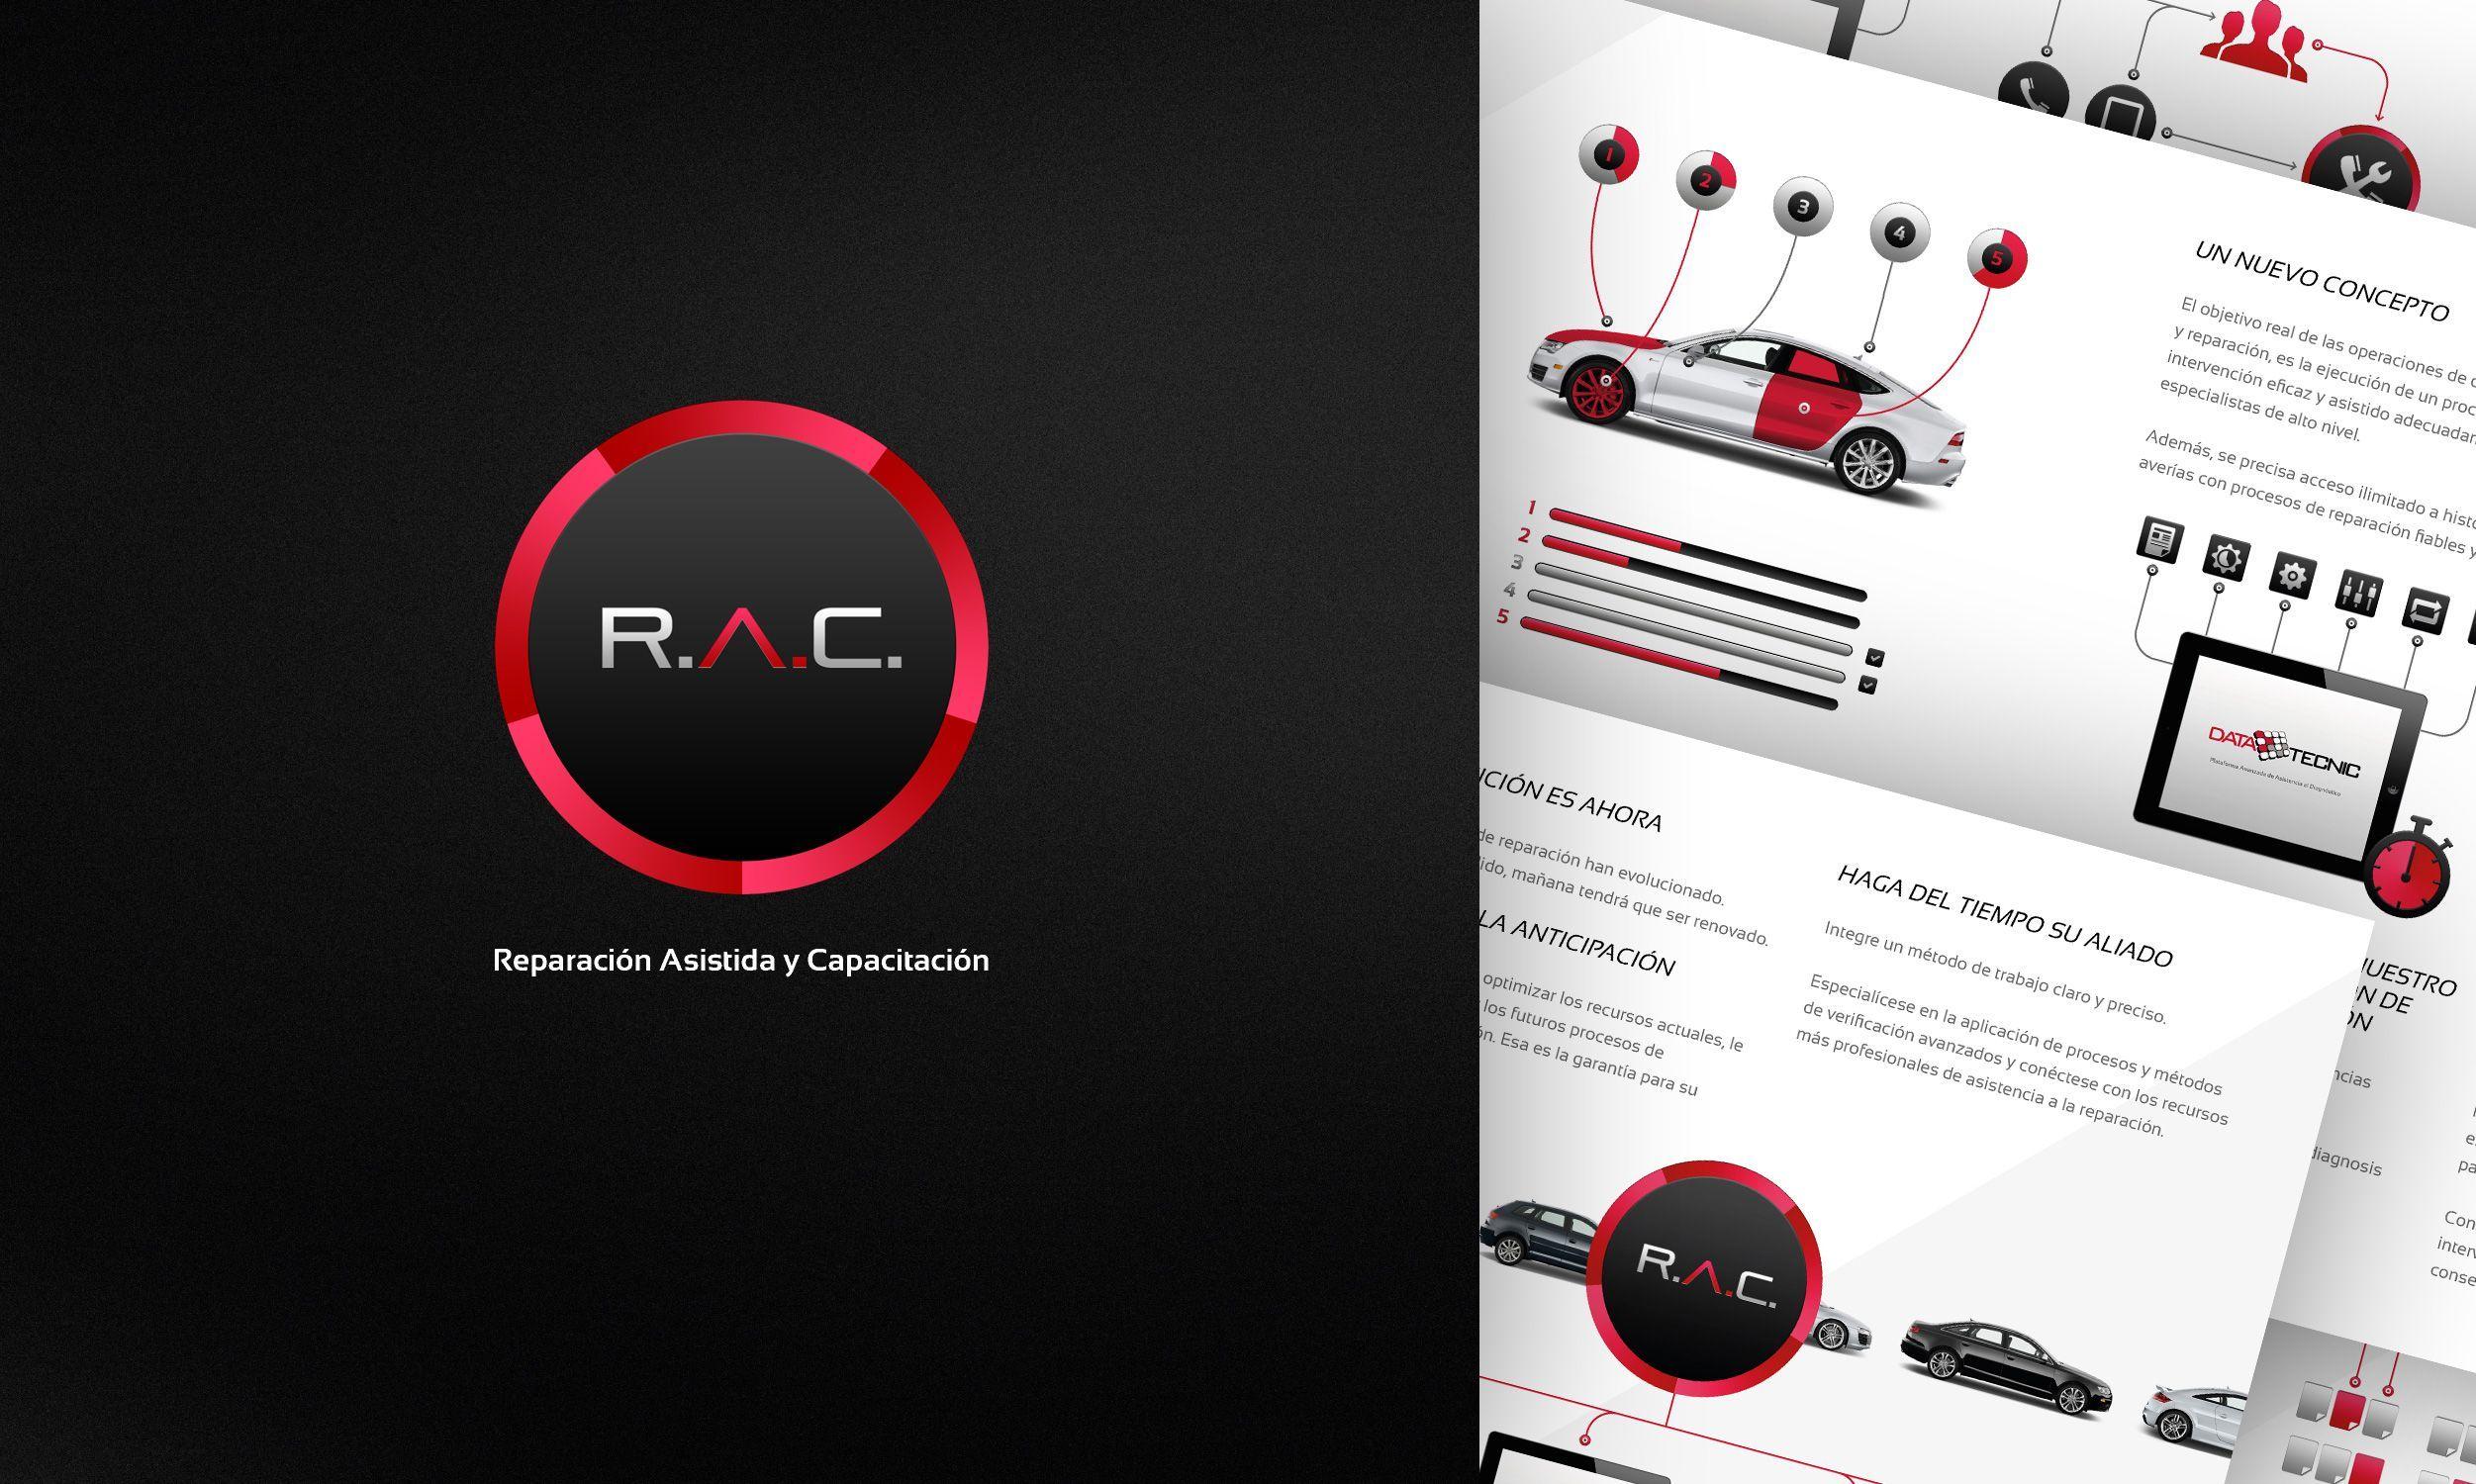 RAC Advertisement Logo - R.A.C. brochure. Advertising & Publishing